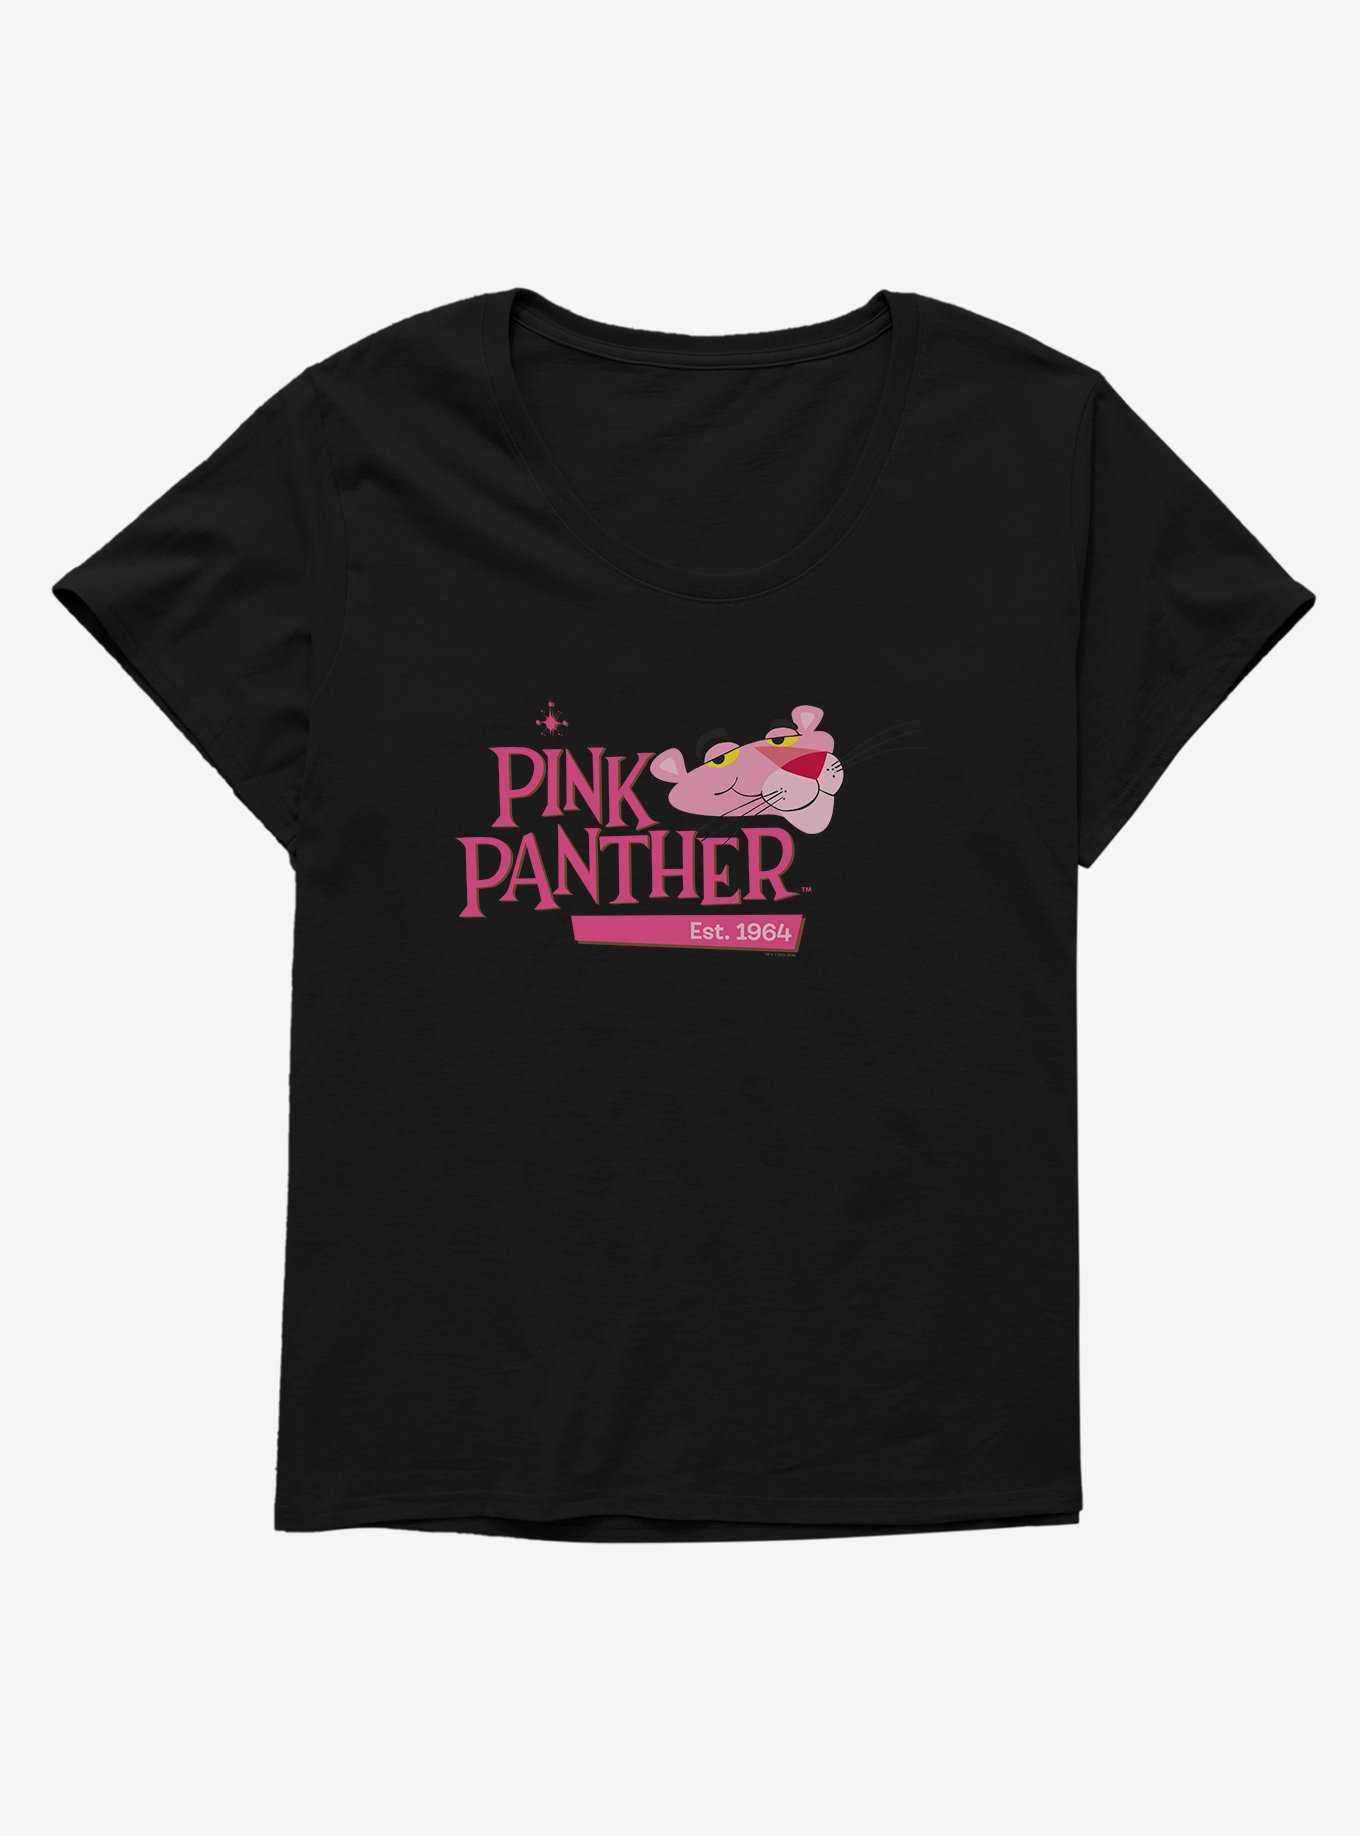 Pink Panther Est 1964 Girls T-Shirt Plus Size, , hi-res